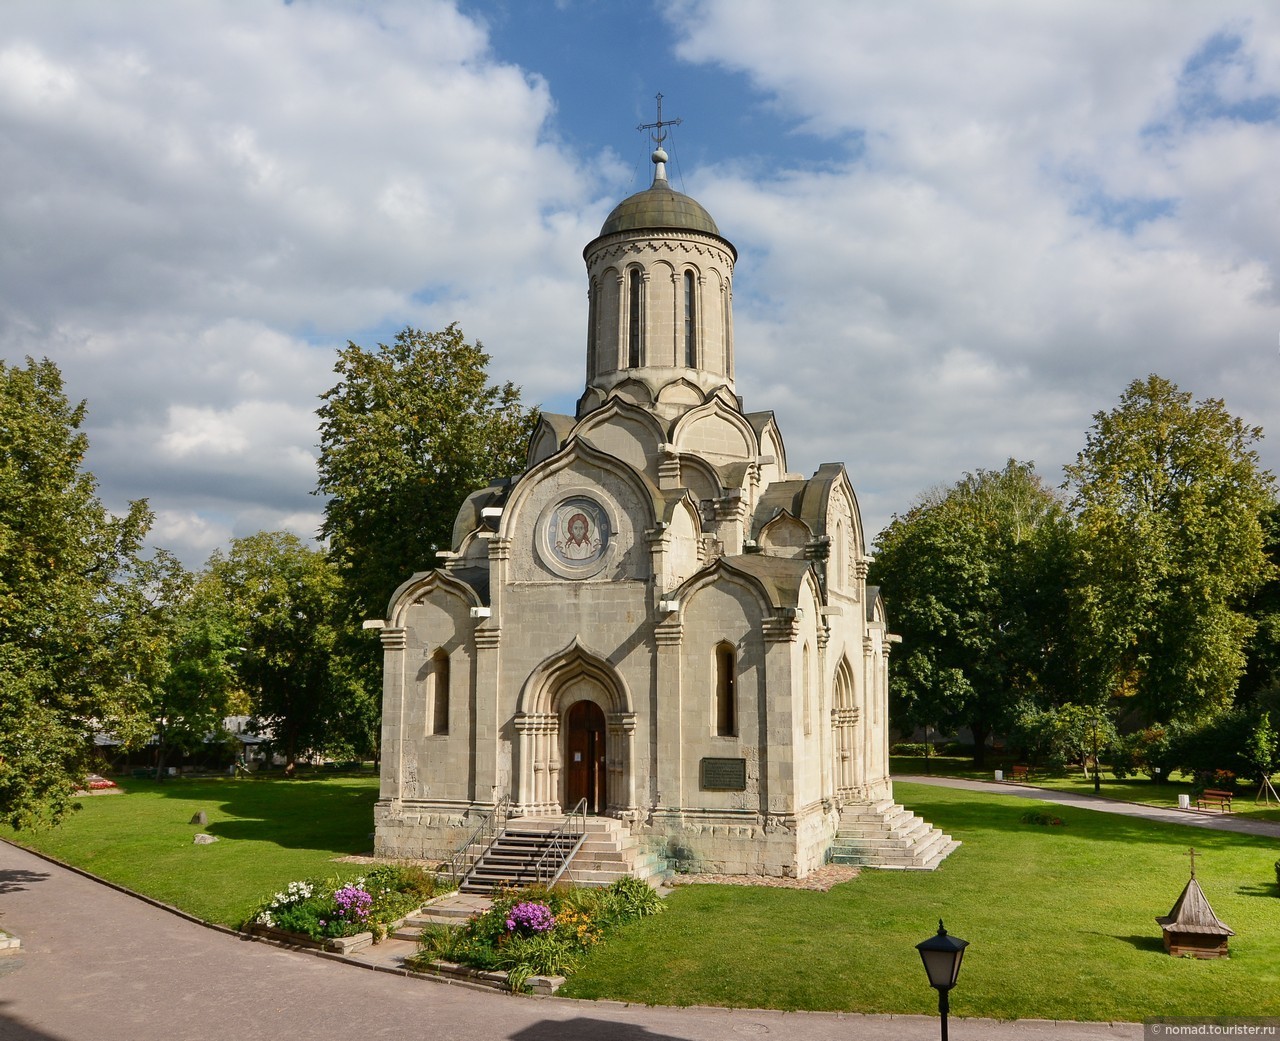 Старая православная церковь. Спааски йсобор андрникова монастыря.